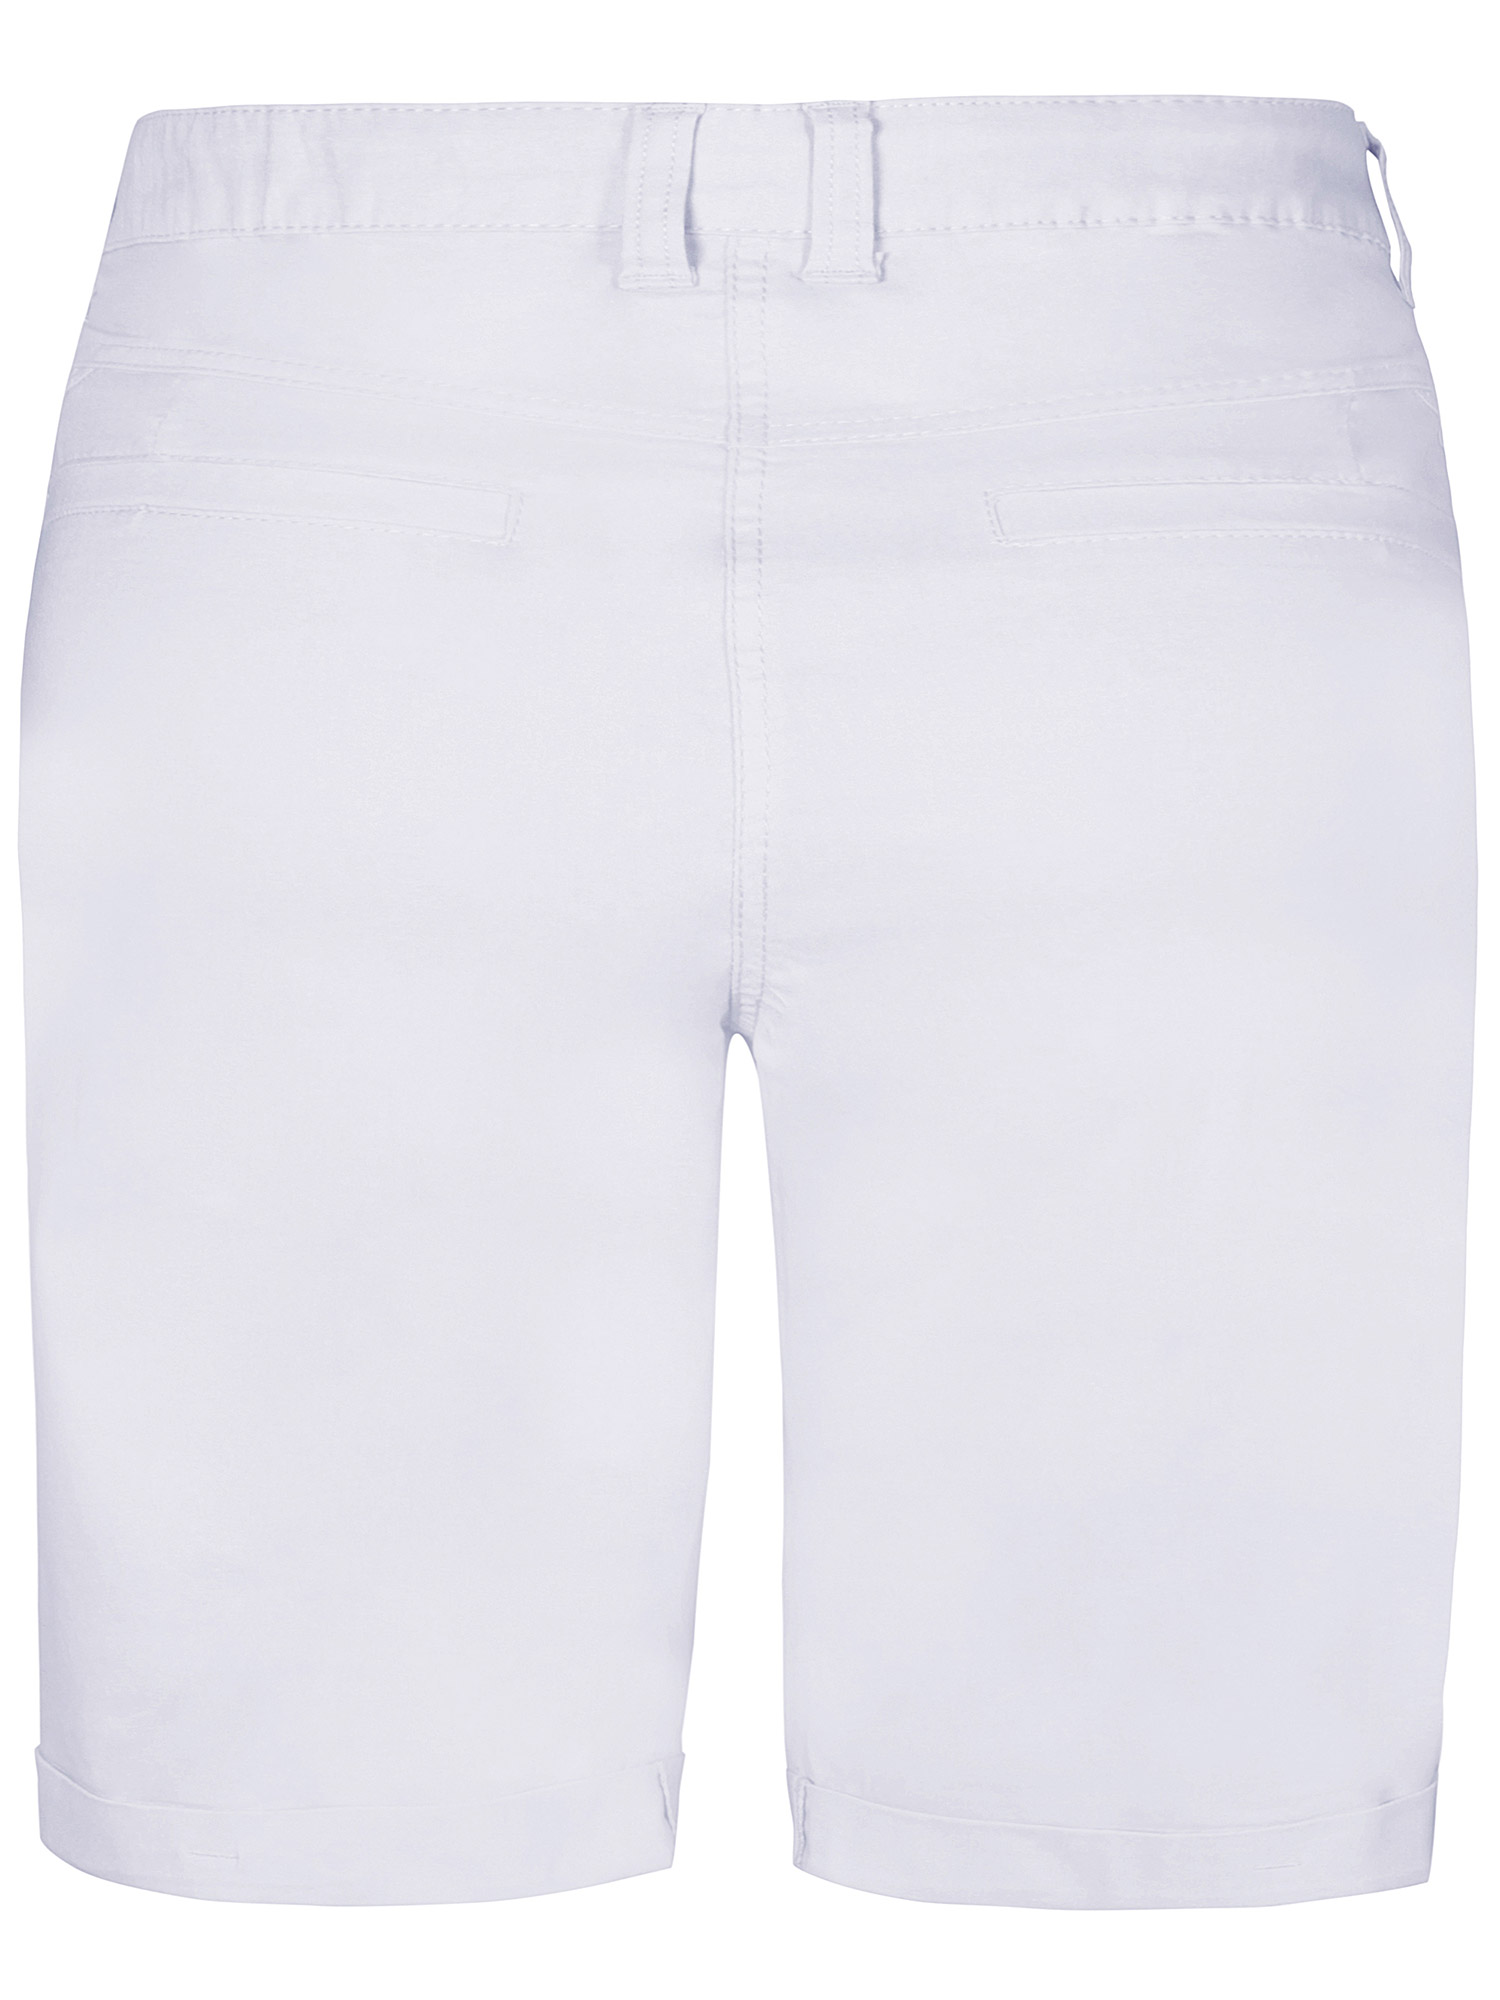 Vita shorts i bengalin kvalitet fra Zhenzi